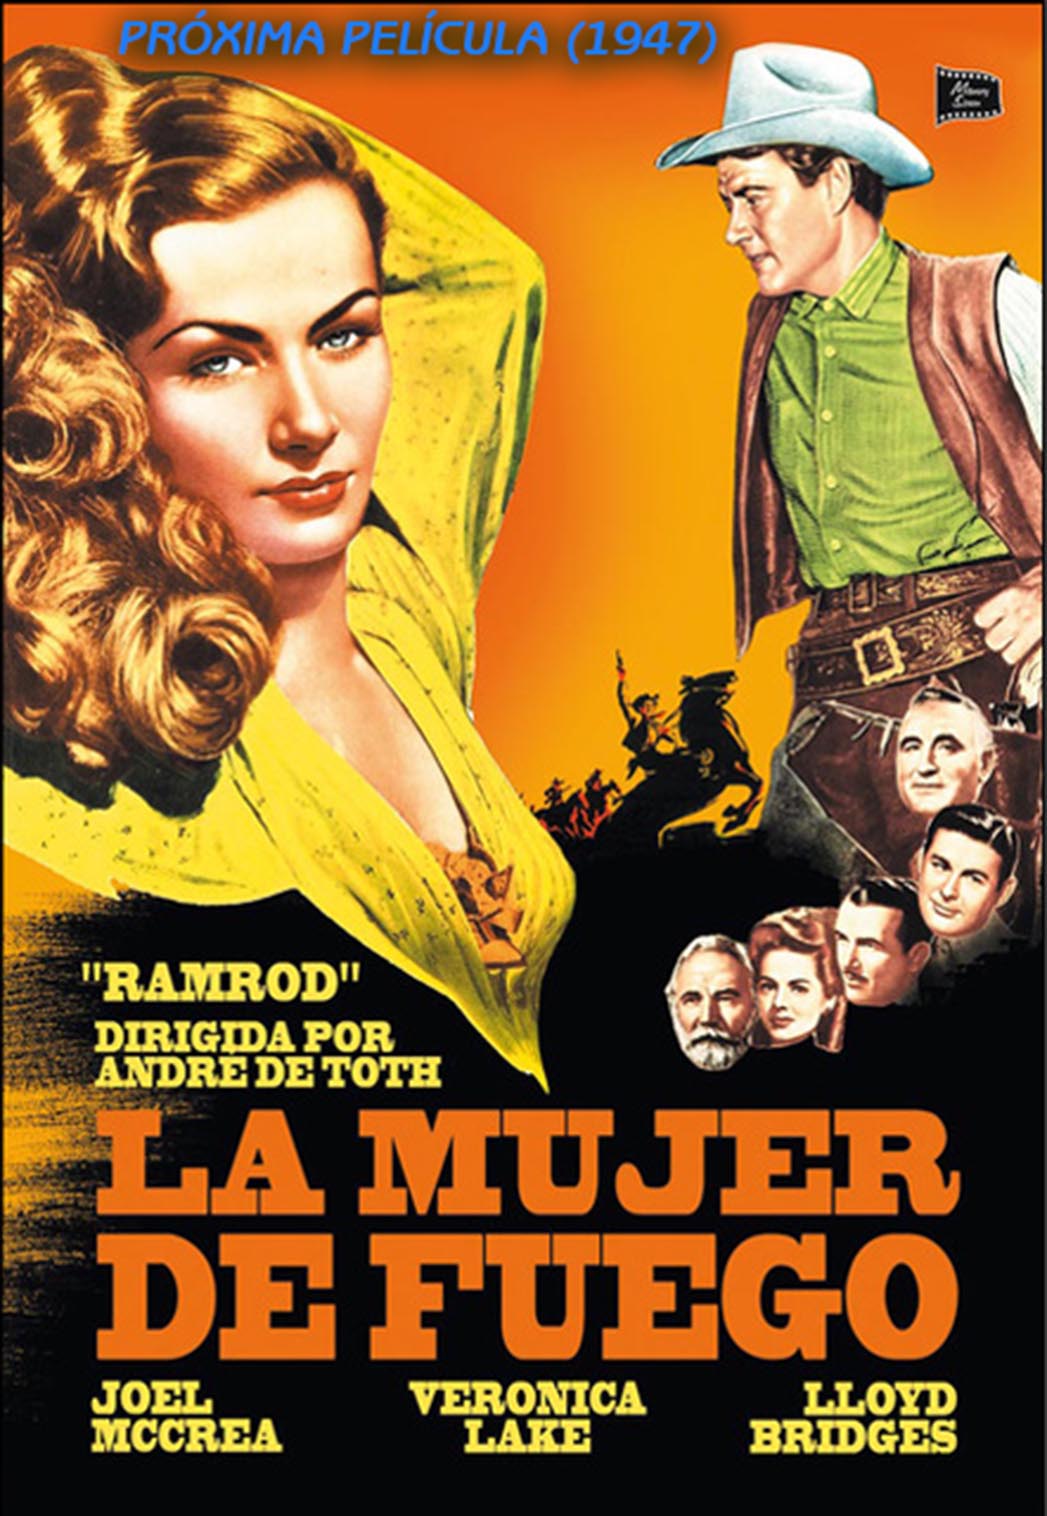 El Pistolero (The Gunfighter / 1950 / G. Peck)